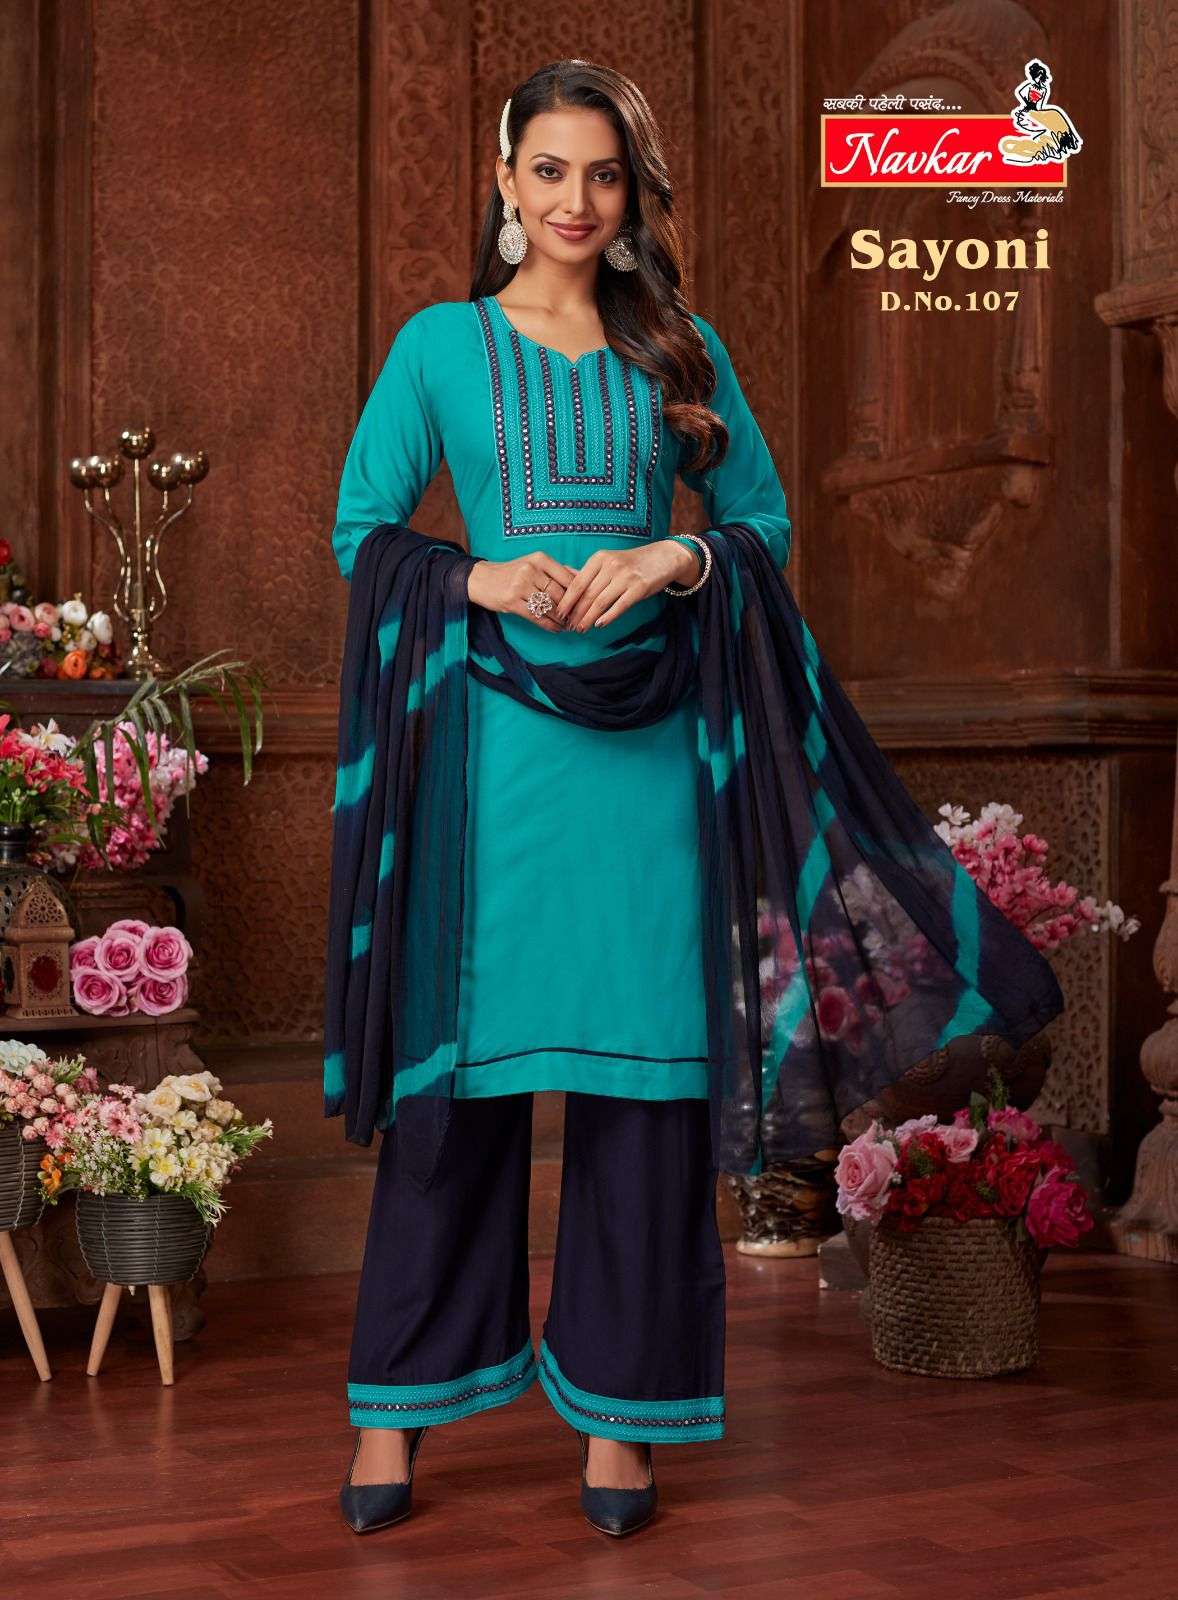 navkar sayoni 101-108 series latest designer top bottom with dupatta catalogue manufacturer surat 